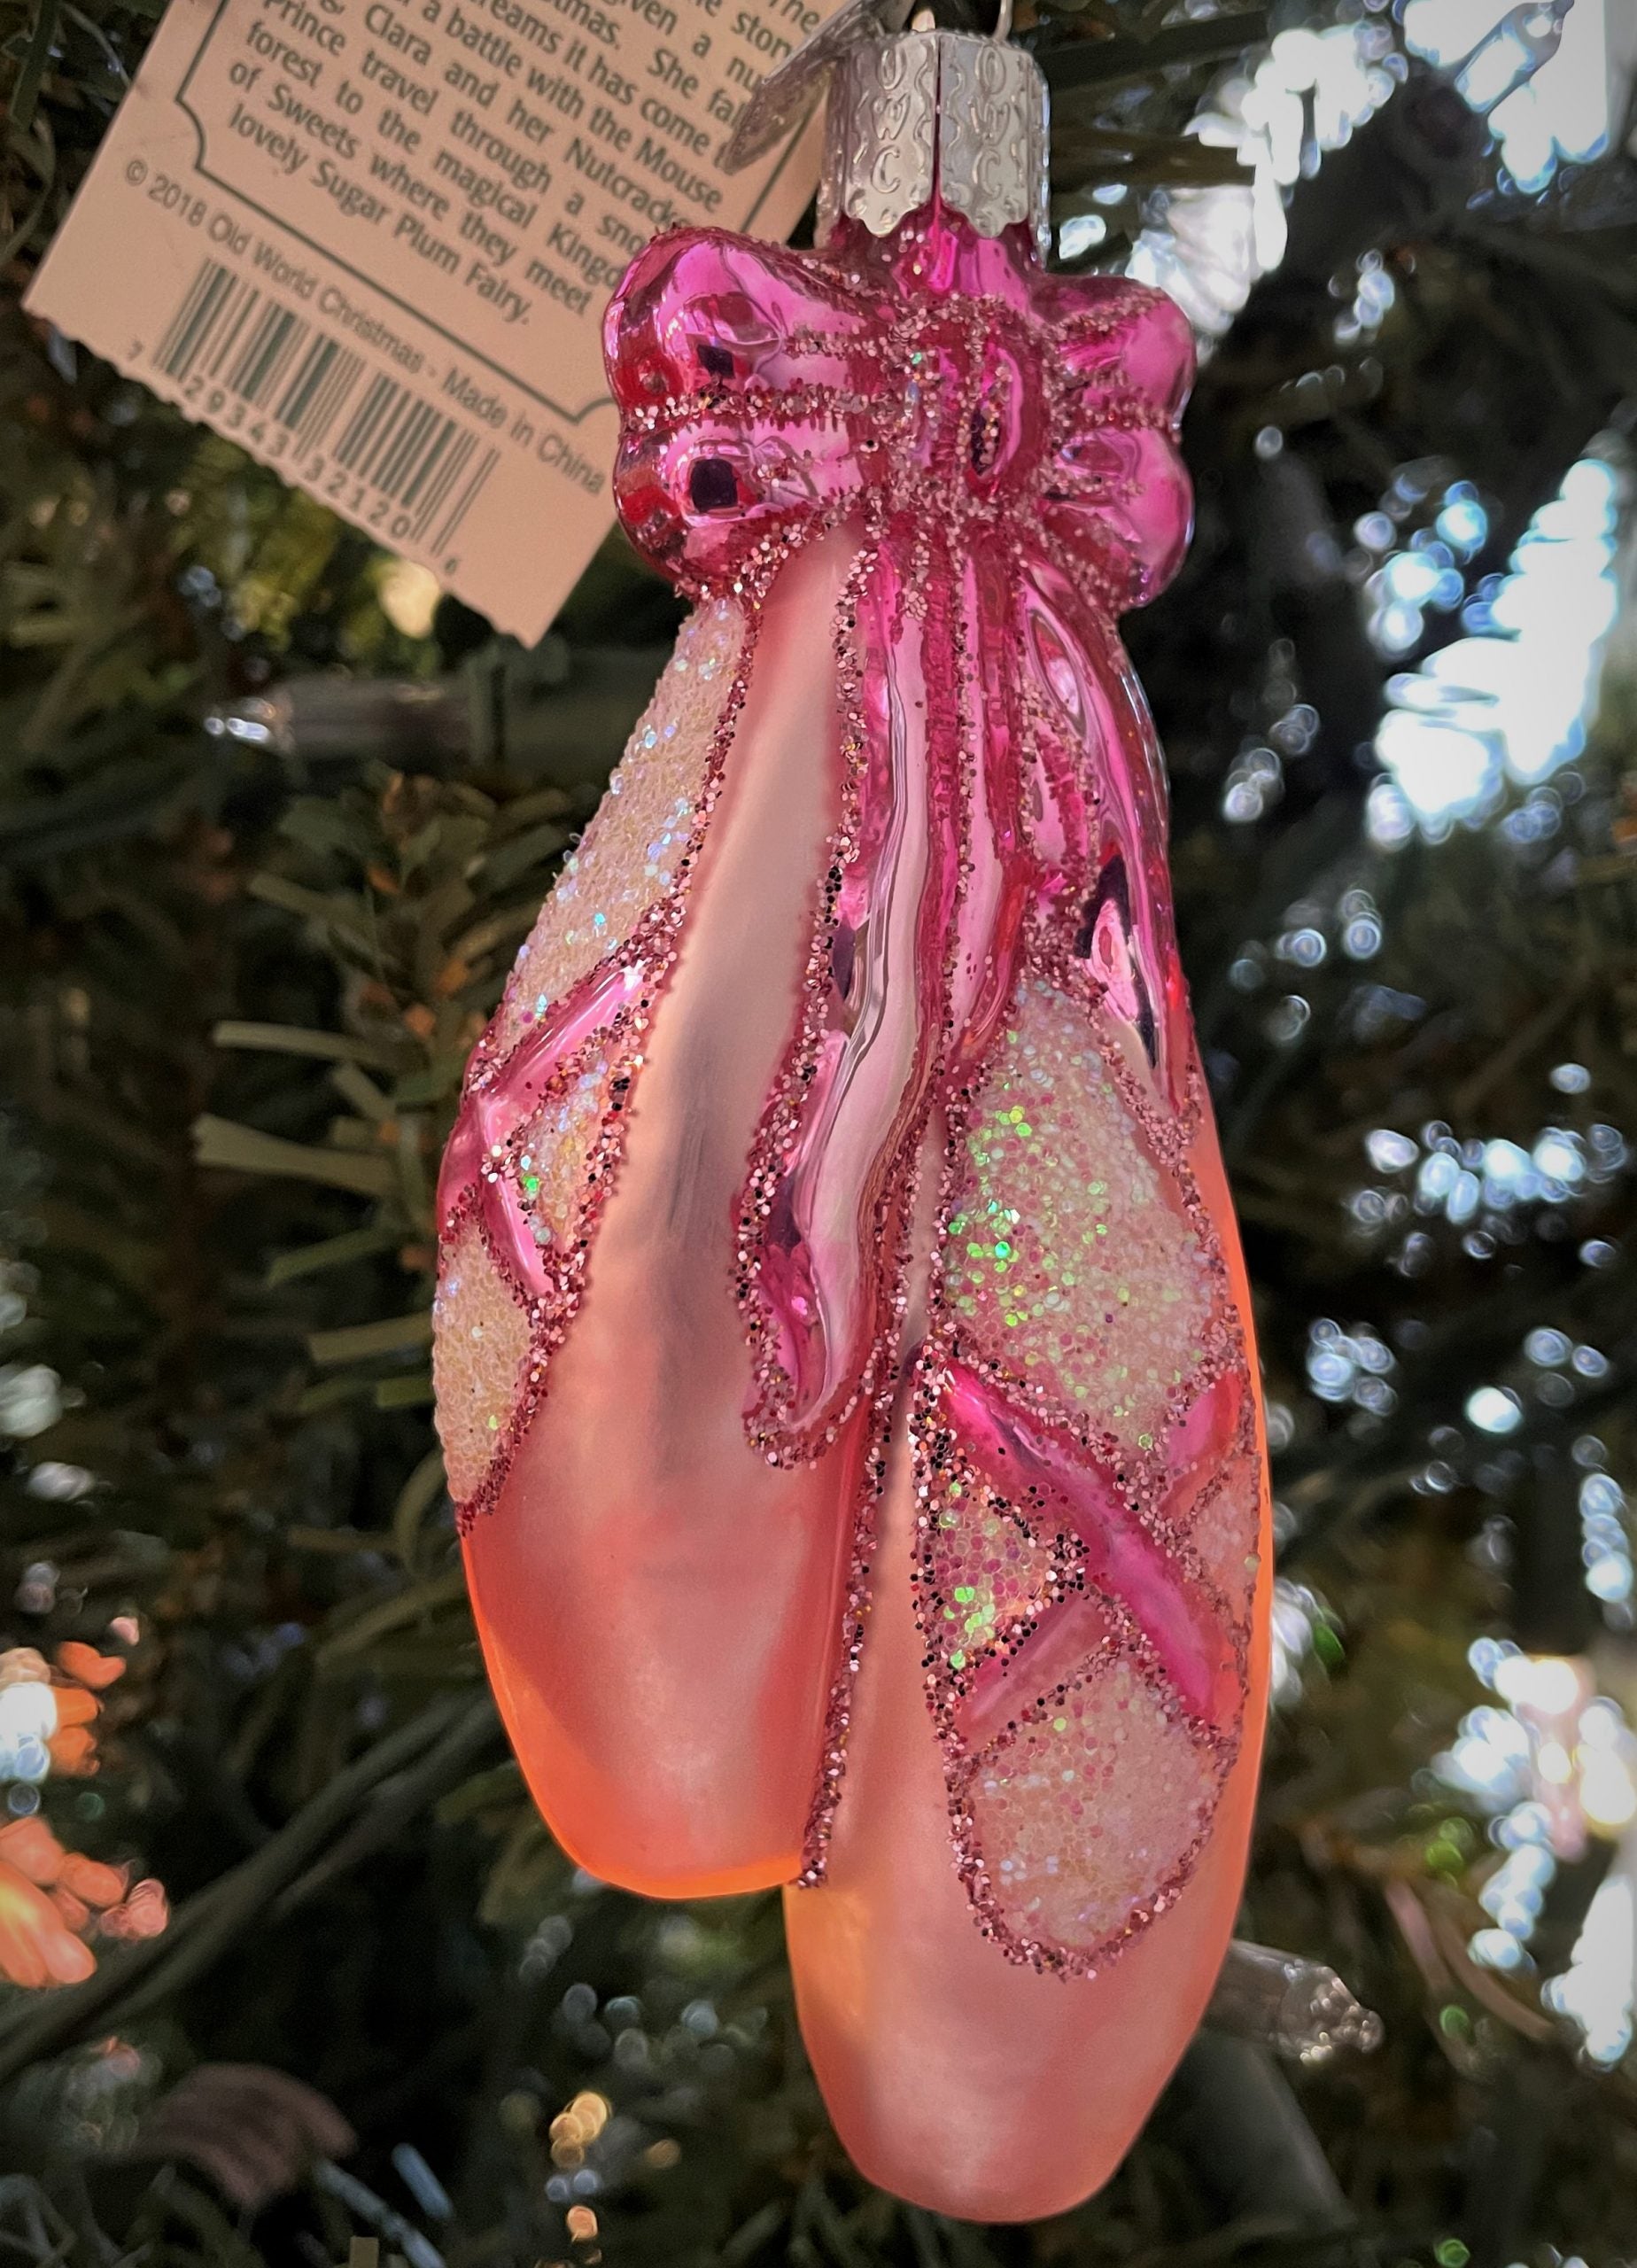 Ballet Toe Shoes Dancer Ornament - Clearance